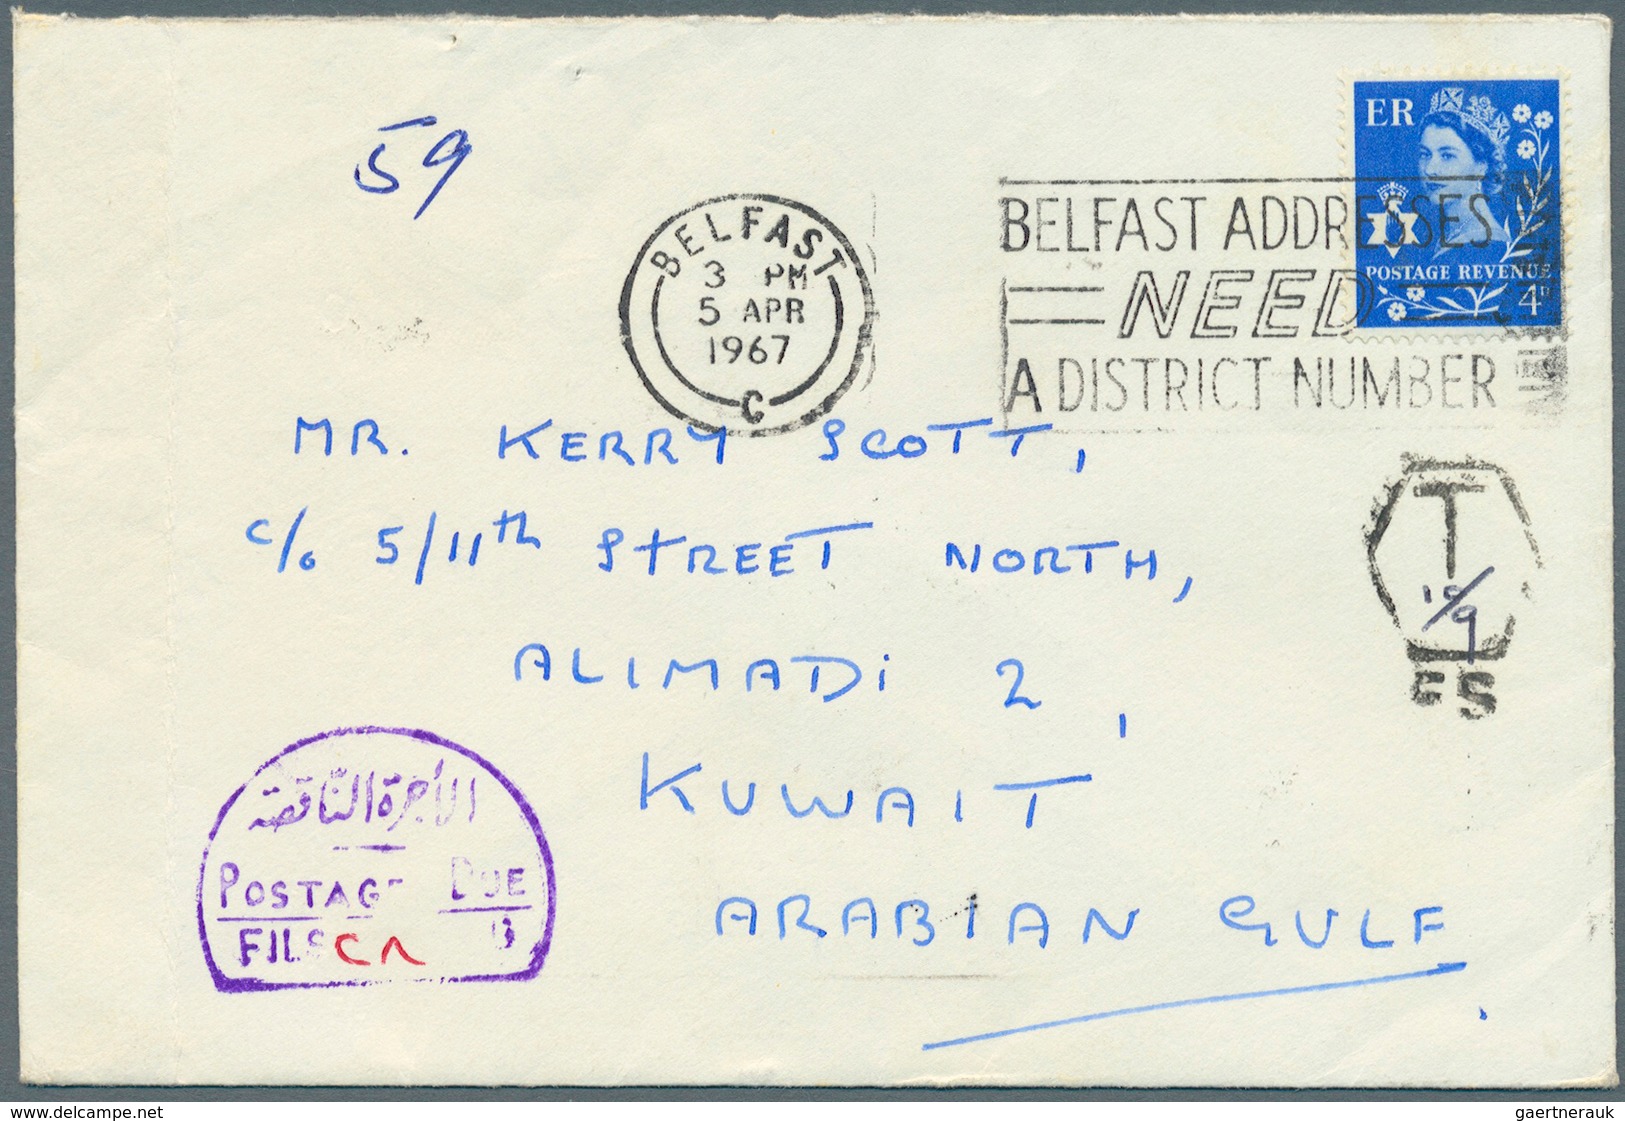 Kuwait - Portomarken: 1963 Kuwait Postage Due Stamps 1f., 2f. And 25f. Tied By Bilingual "AL AHMADI - Koweït